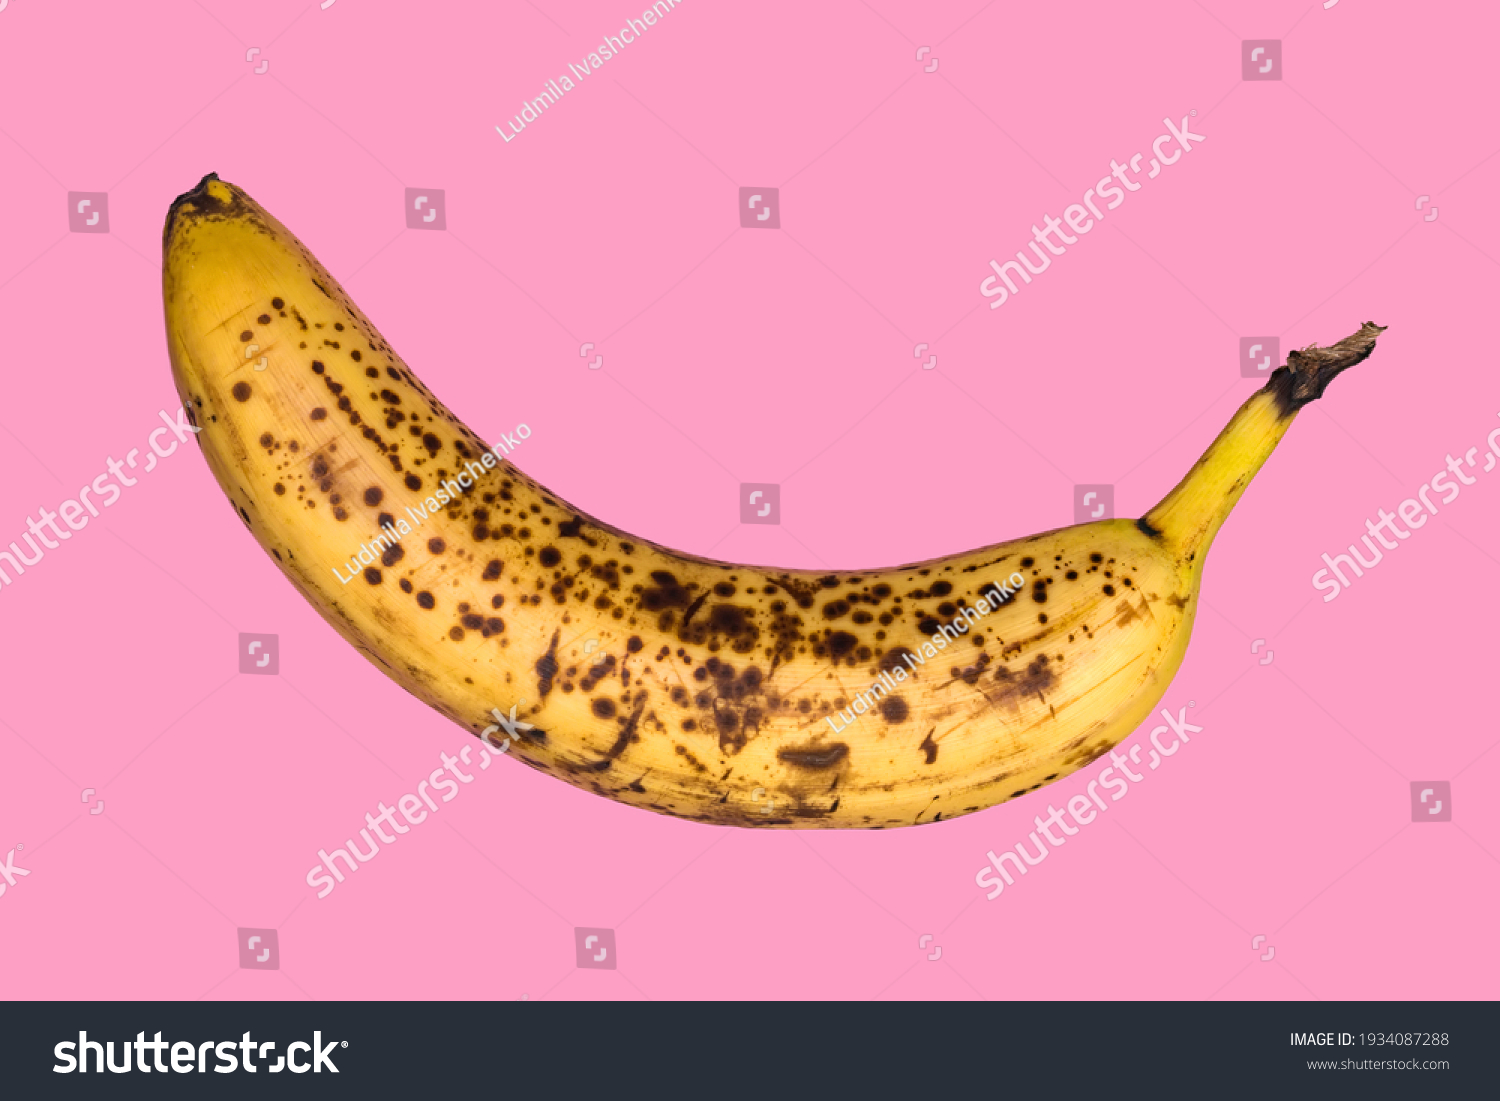 Rotten banana isolated on pink background. Expired fruit. #1934087288